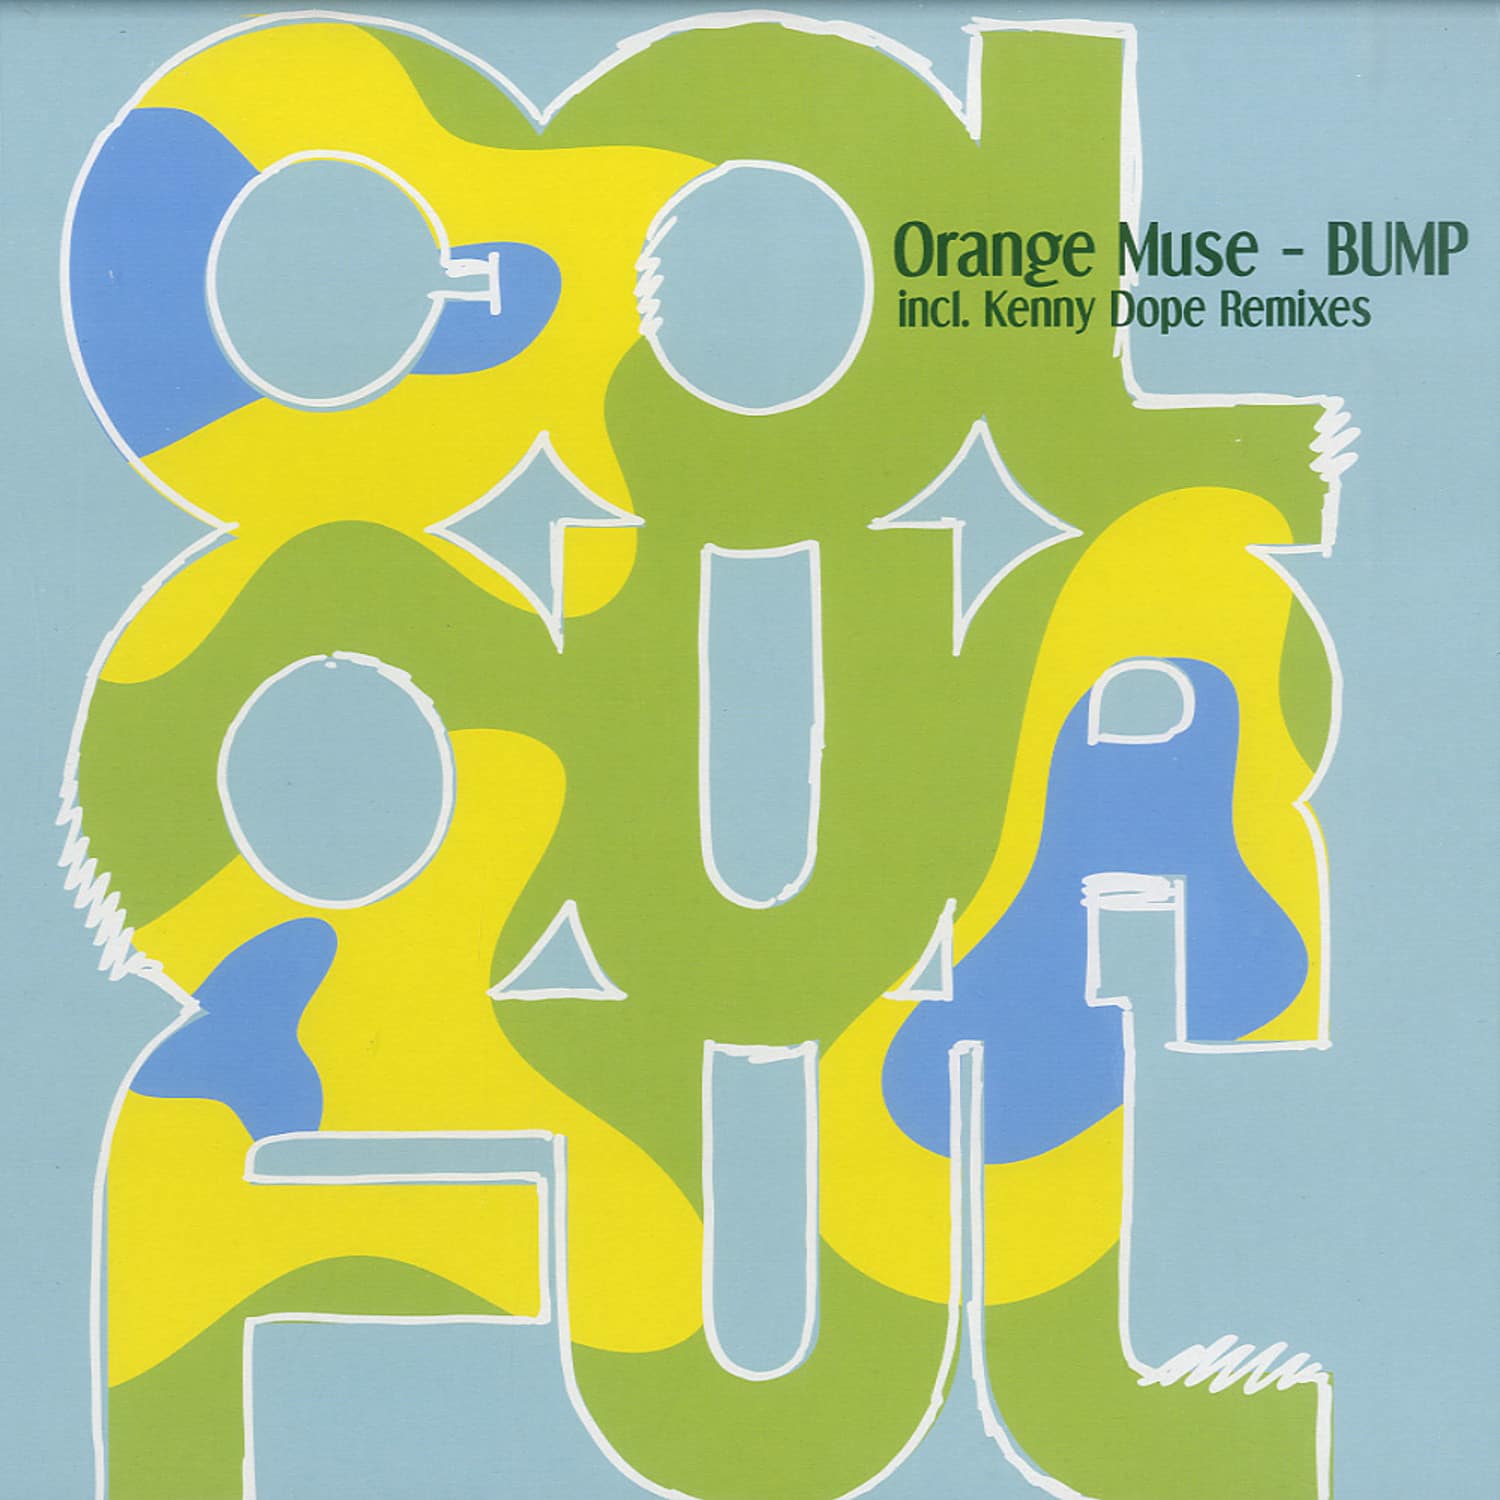 Orange Muse - BUMP - KENNY DOPE REMIX